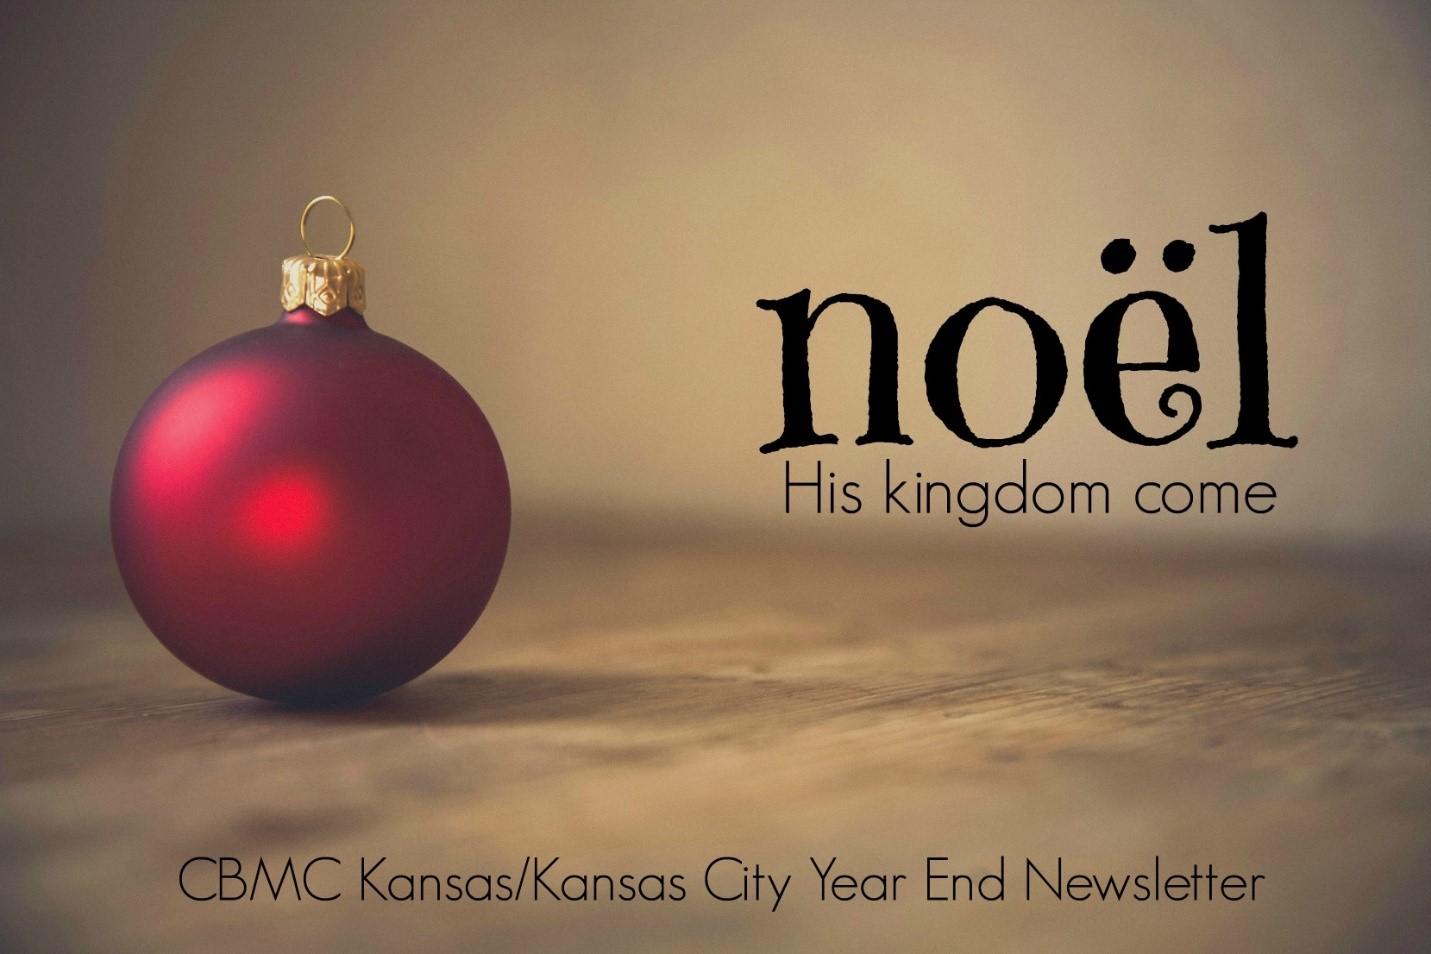 CBMC Kansas / Kansas City Year End Newsletter